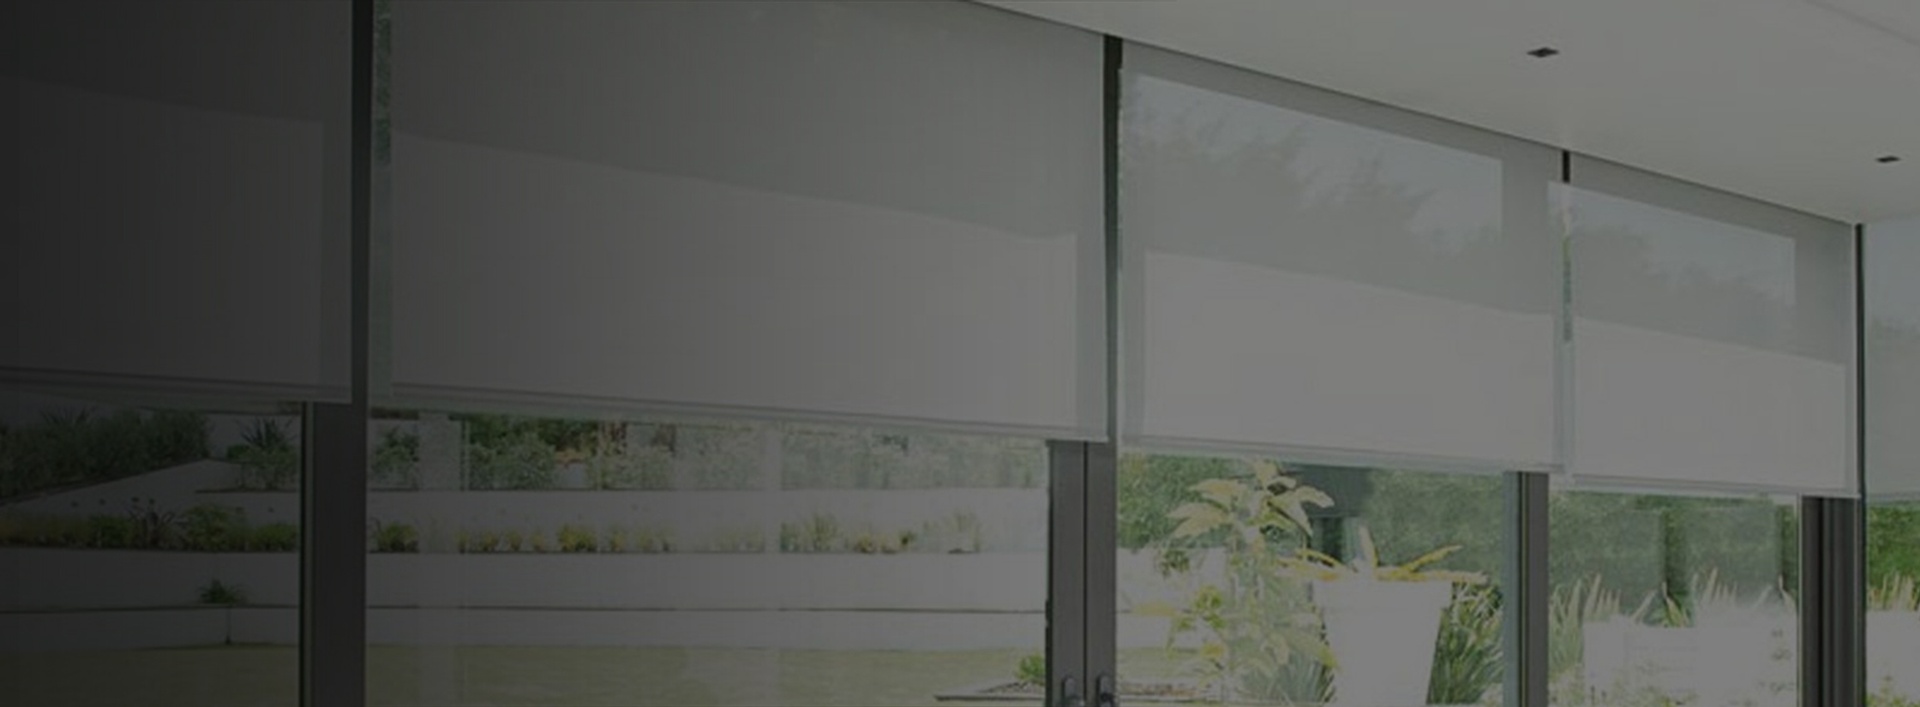 Indoor, Outdoor Lighting Control Window Treatments by Austin Control4 Dealers - AV Connect